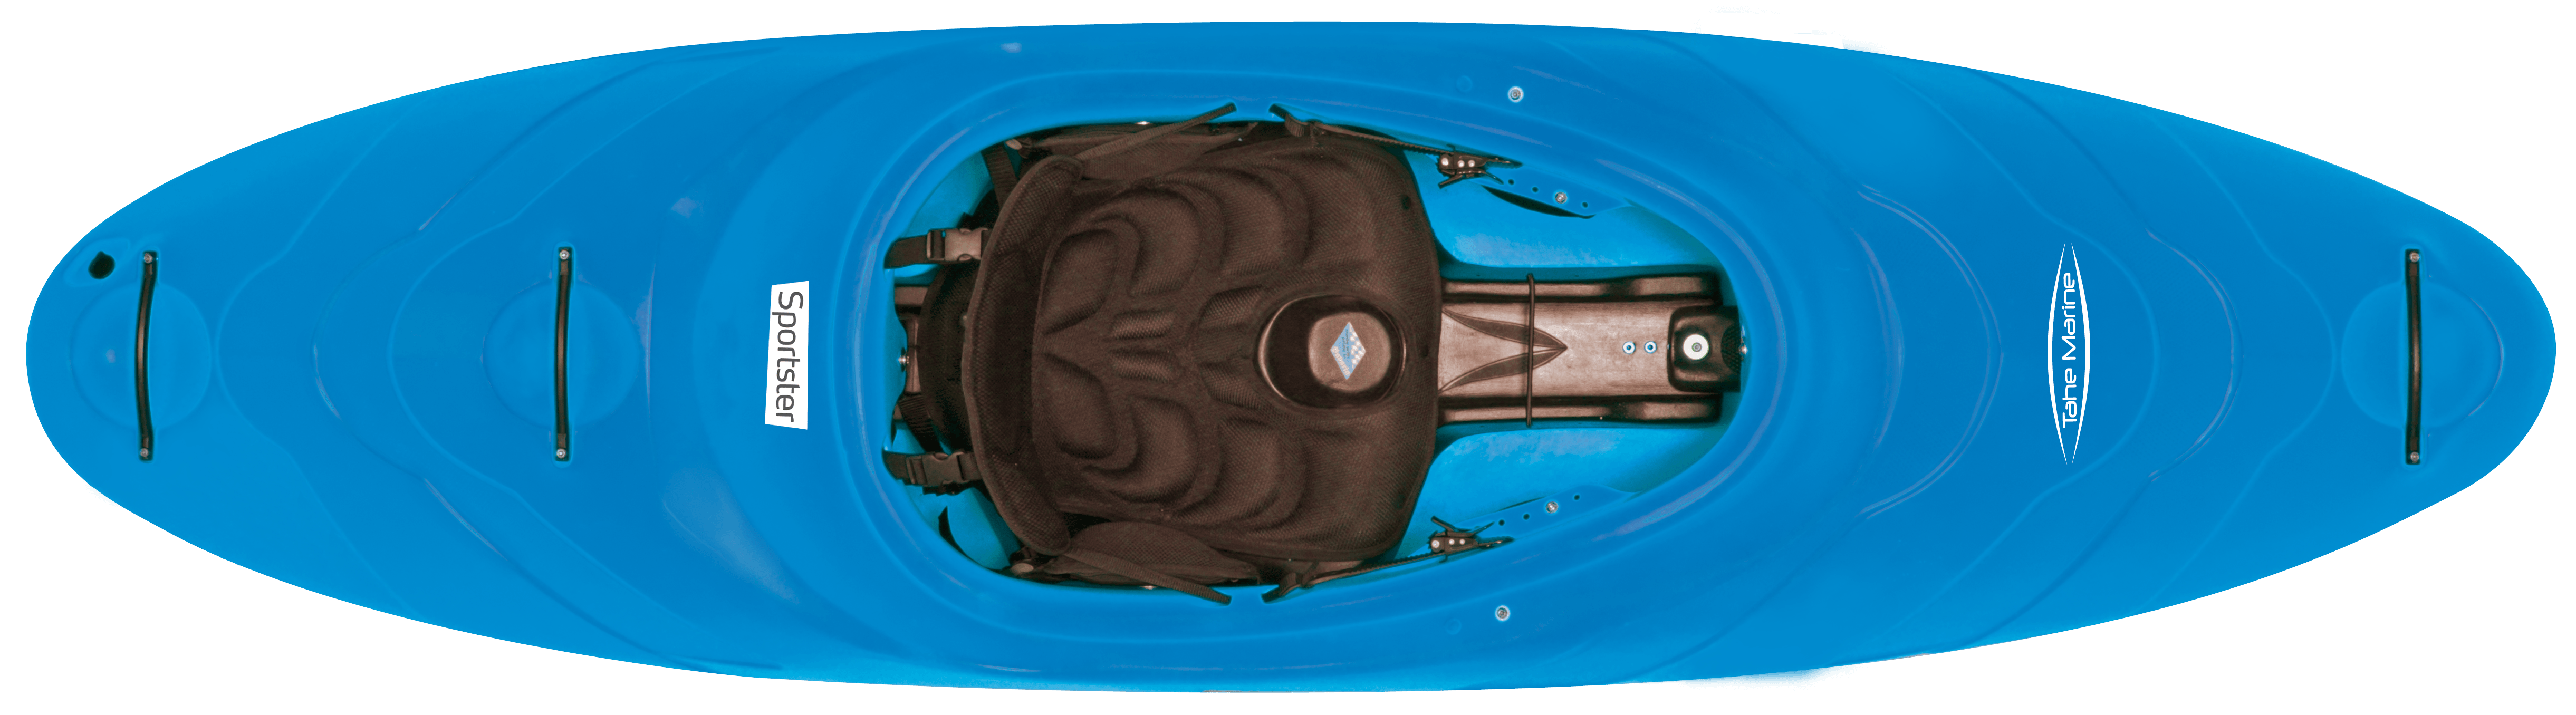 Kayak Sportster Reloaded Bleu